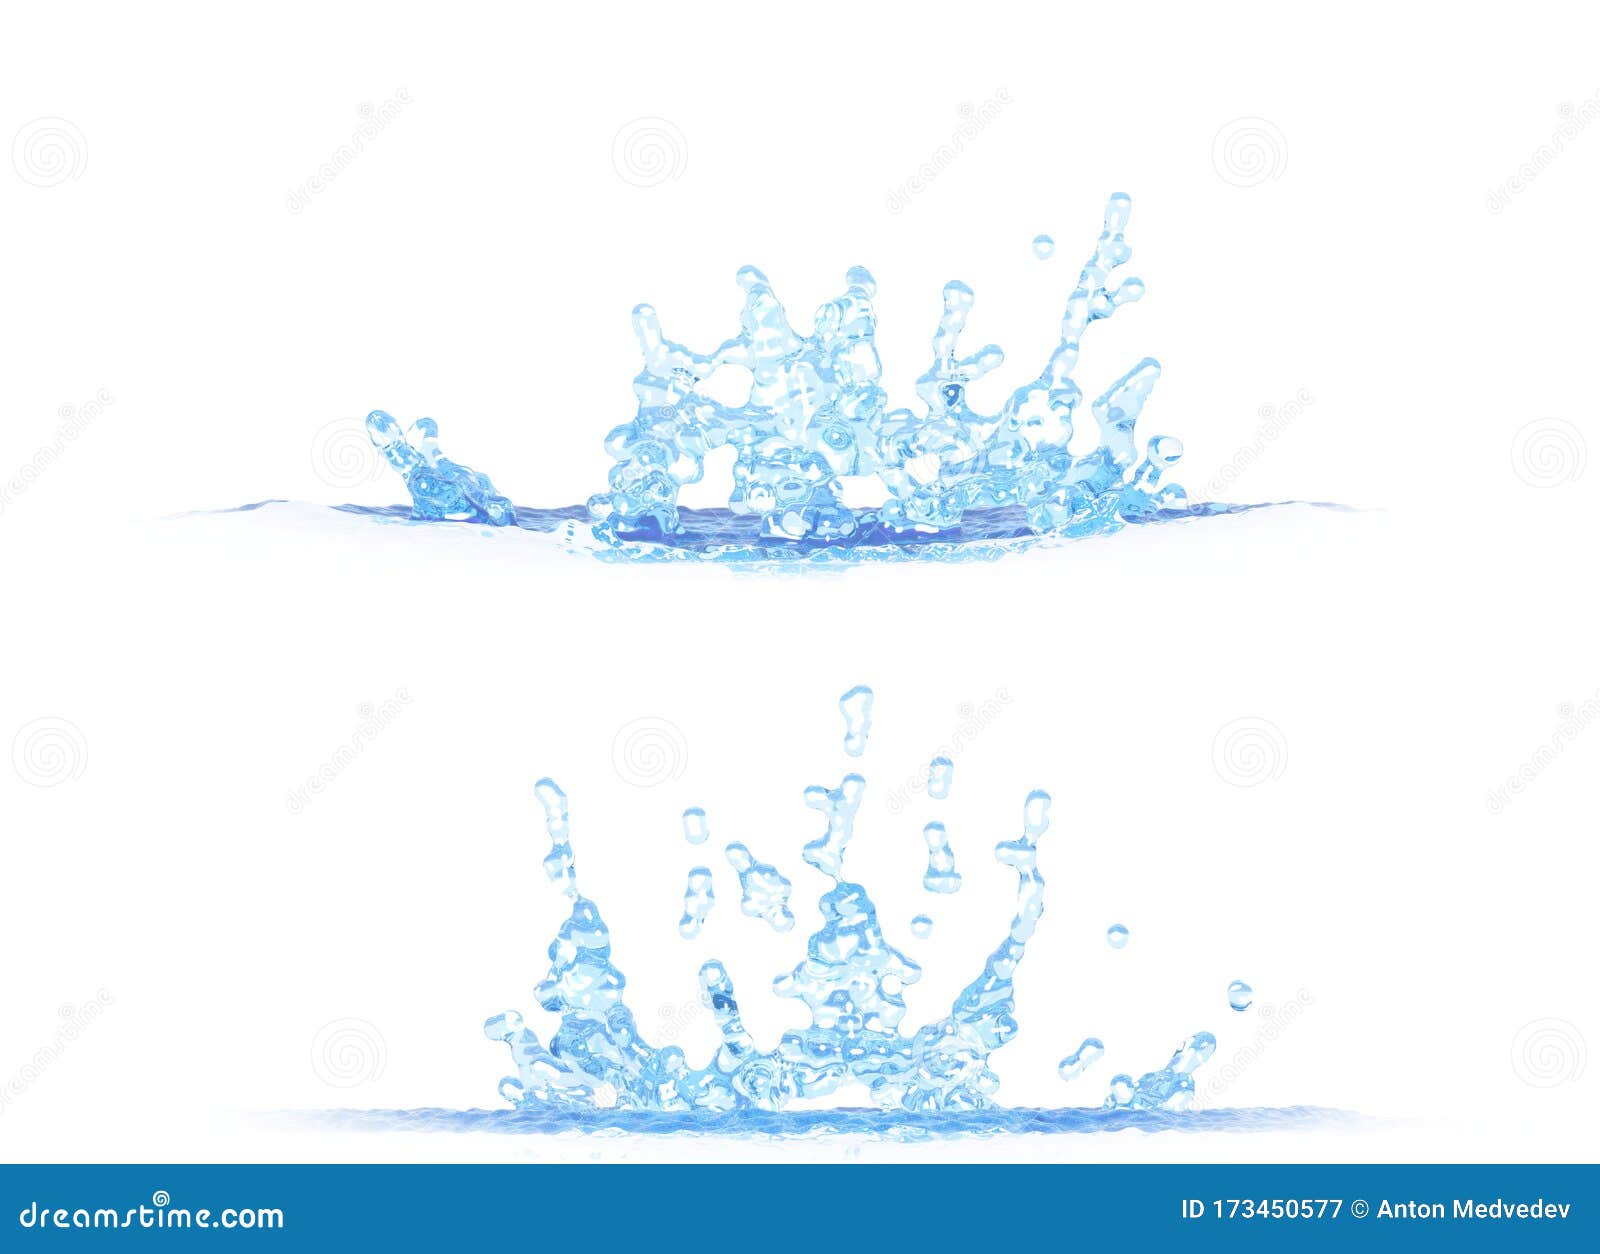 Download 3D Illustration Of 2 Side Views Of Cool Water Splash ...